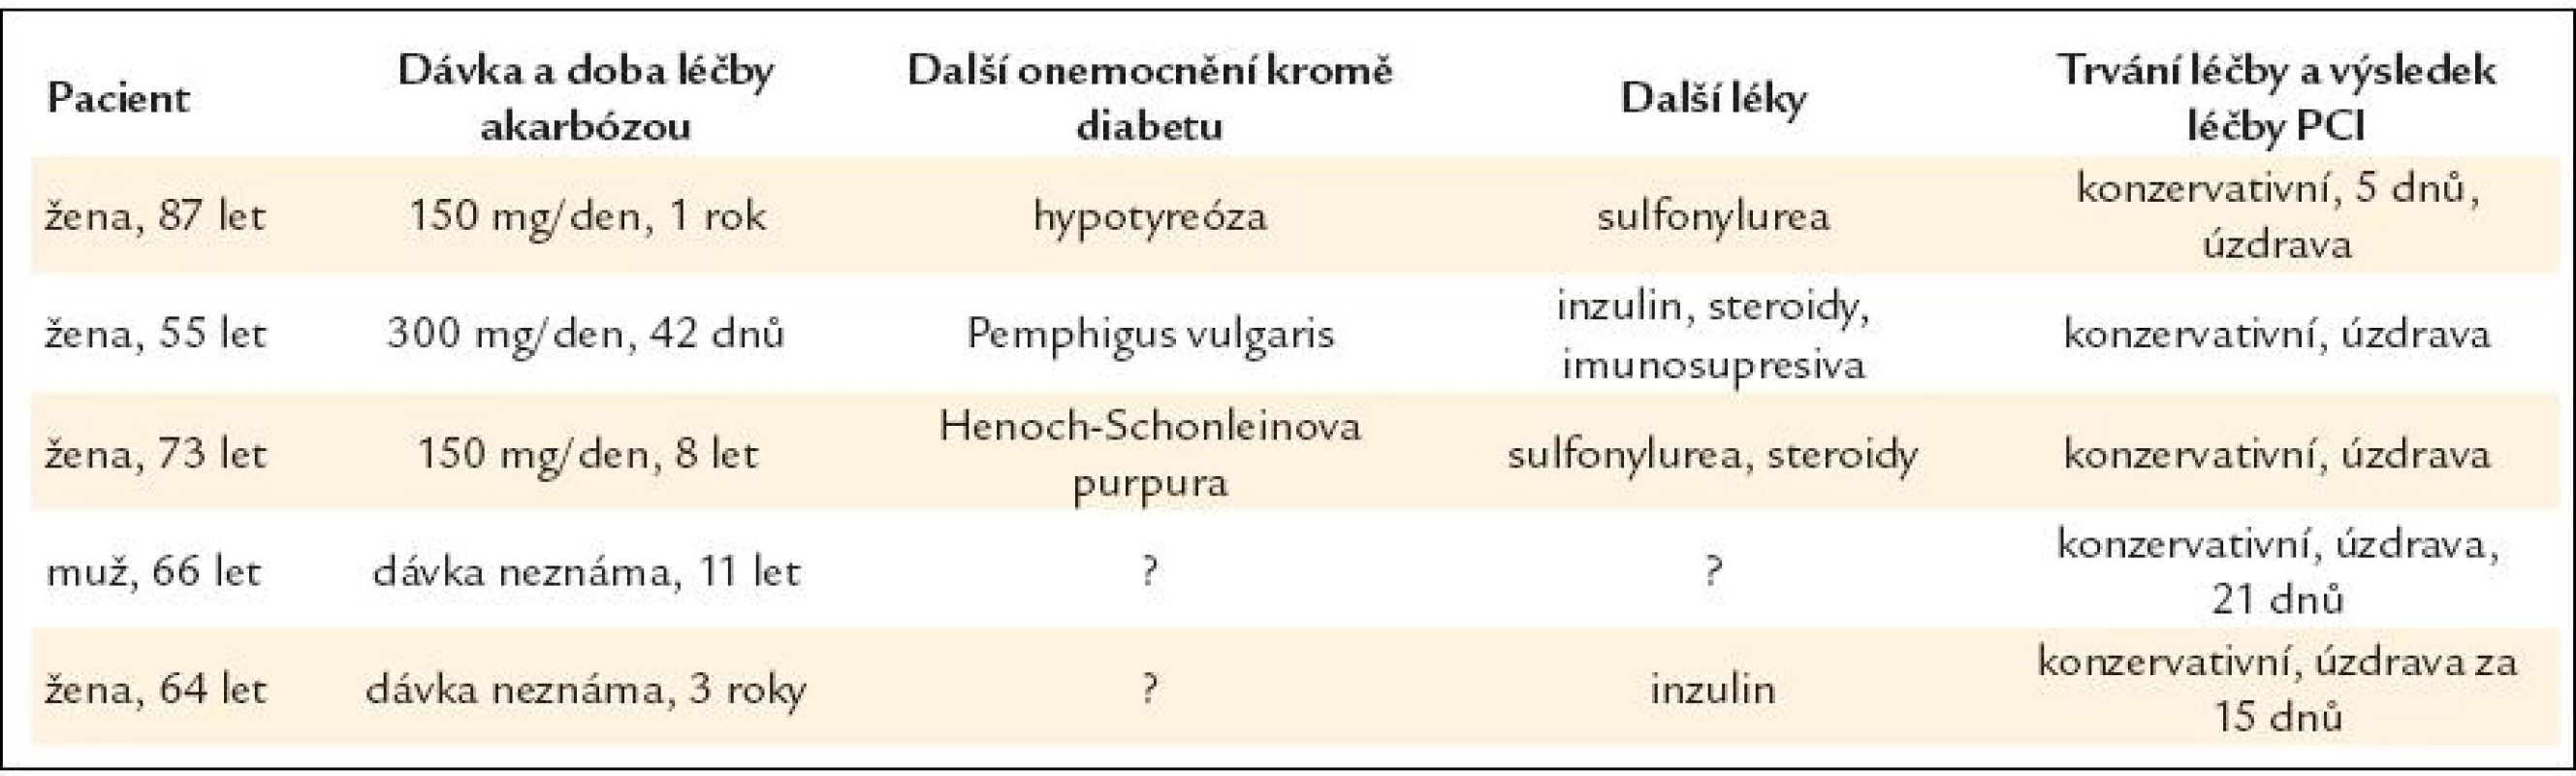 Kazuistiky pneumocystis cystodies intestinalis (PCI) spojené s léčbou akarbózou. Podle [6].